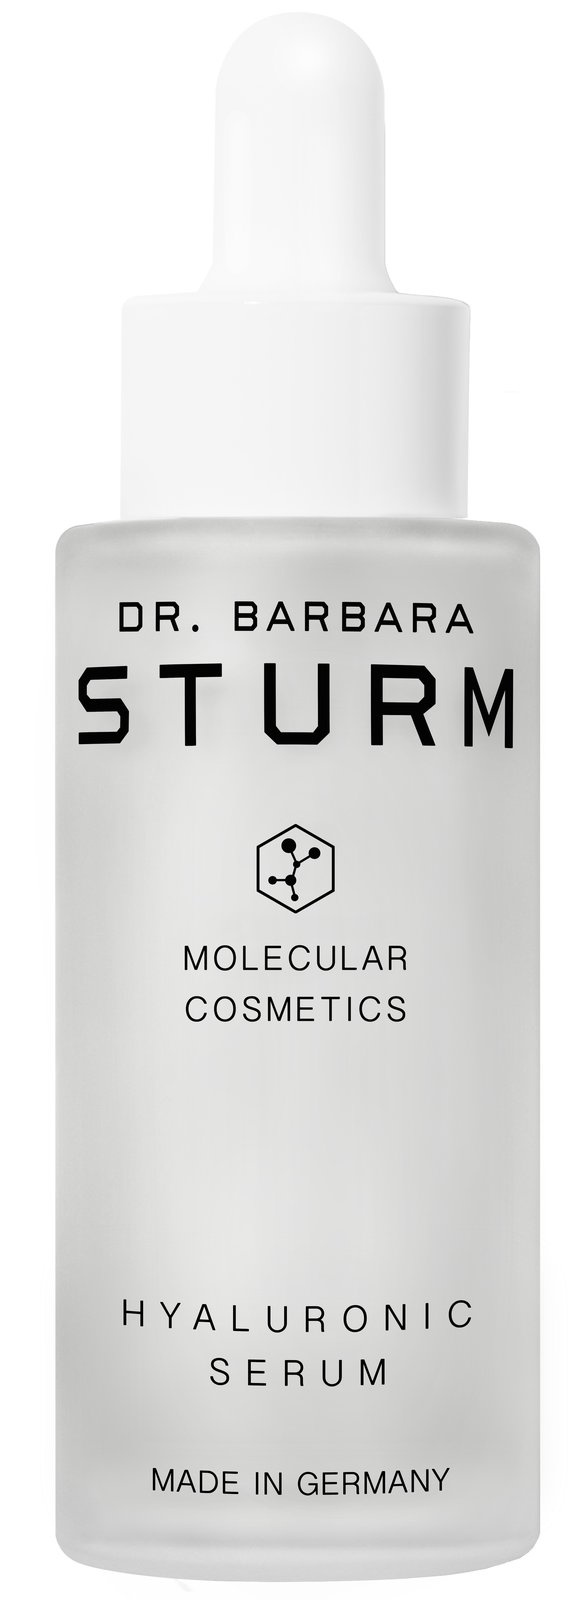 Hydratační sérum, Dr. Barbara Sturm, 6750 Kč